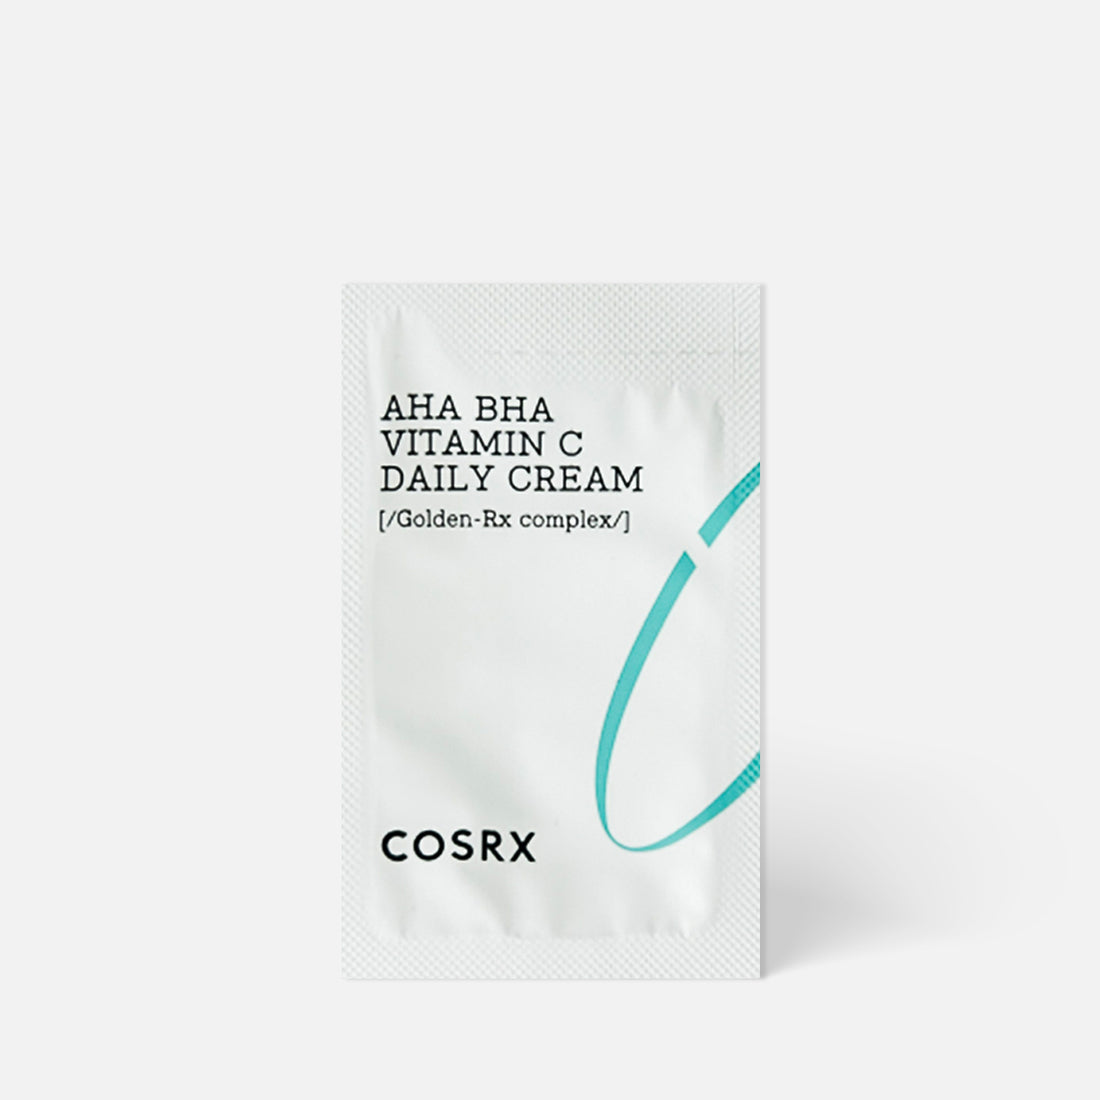 COSRX AHA BHA Daily Cream 1.5ml Sample